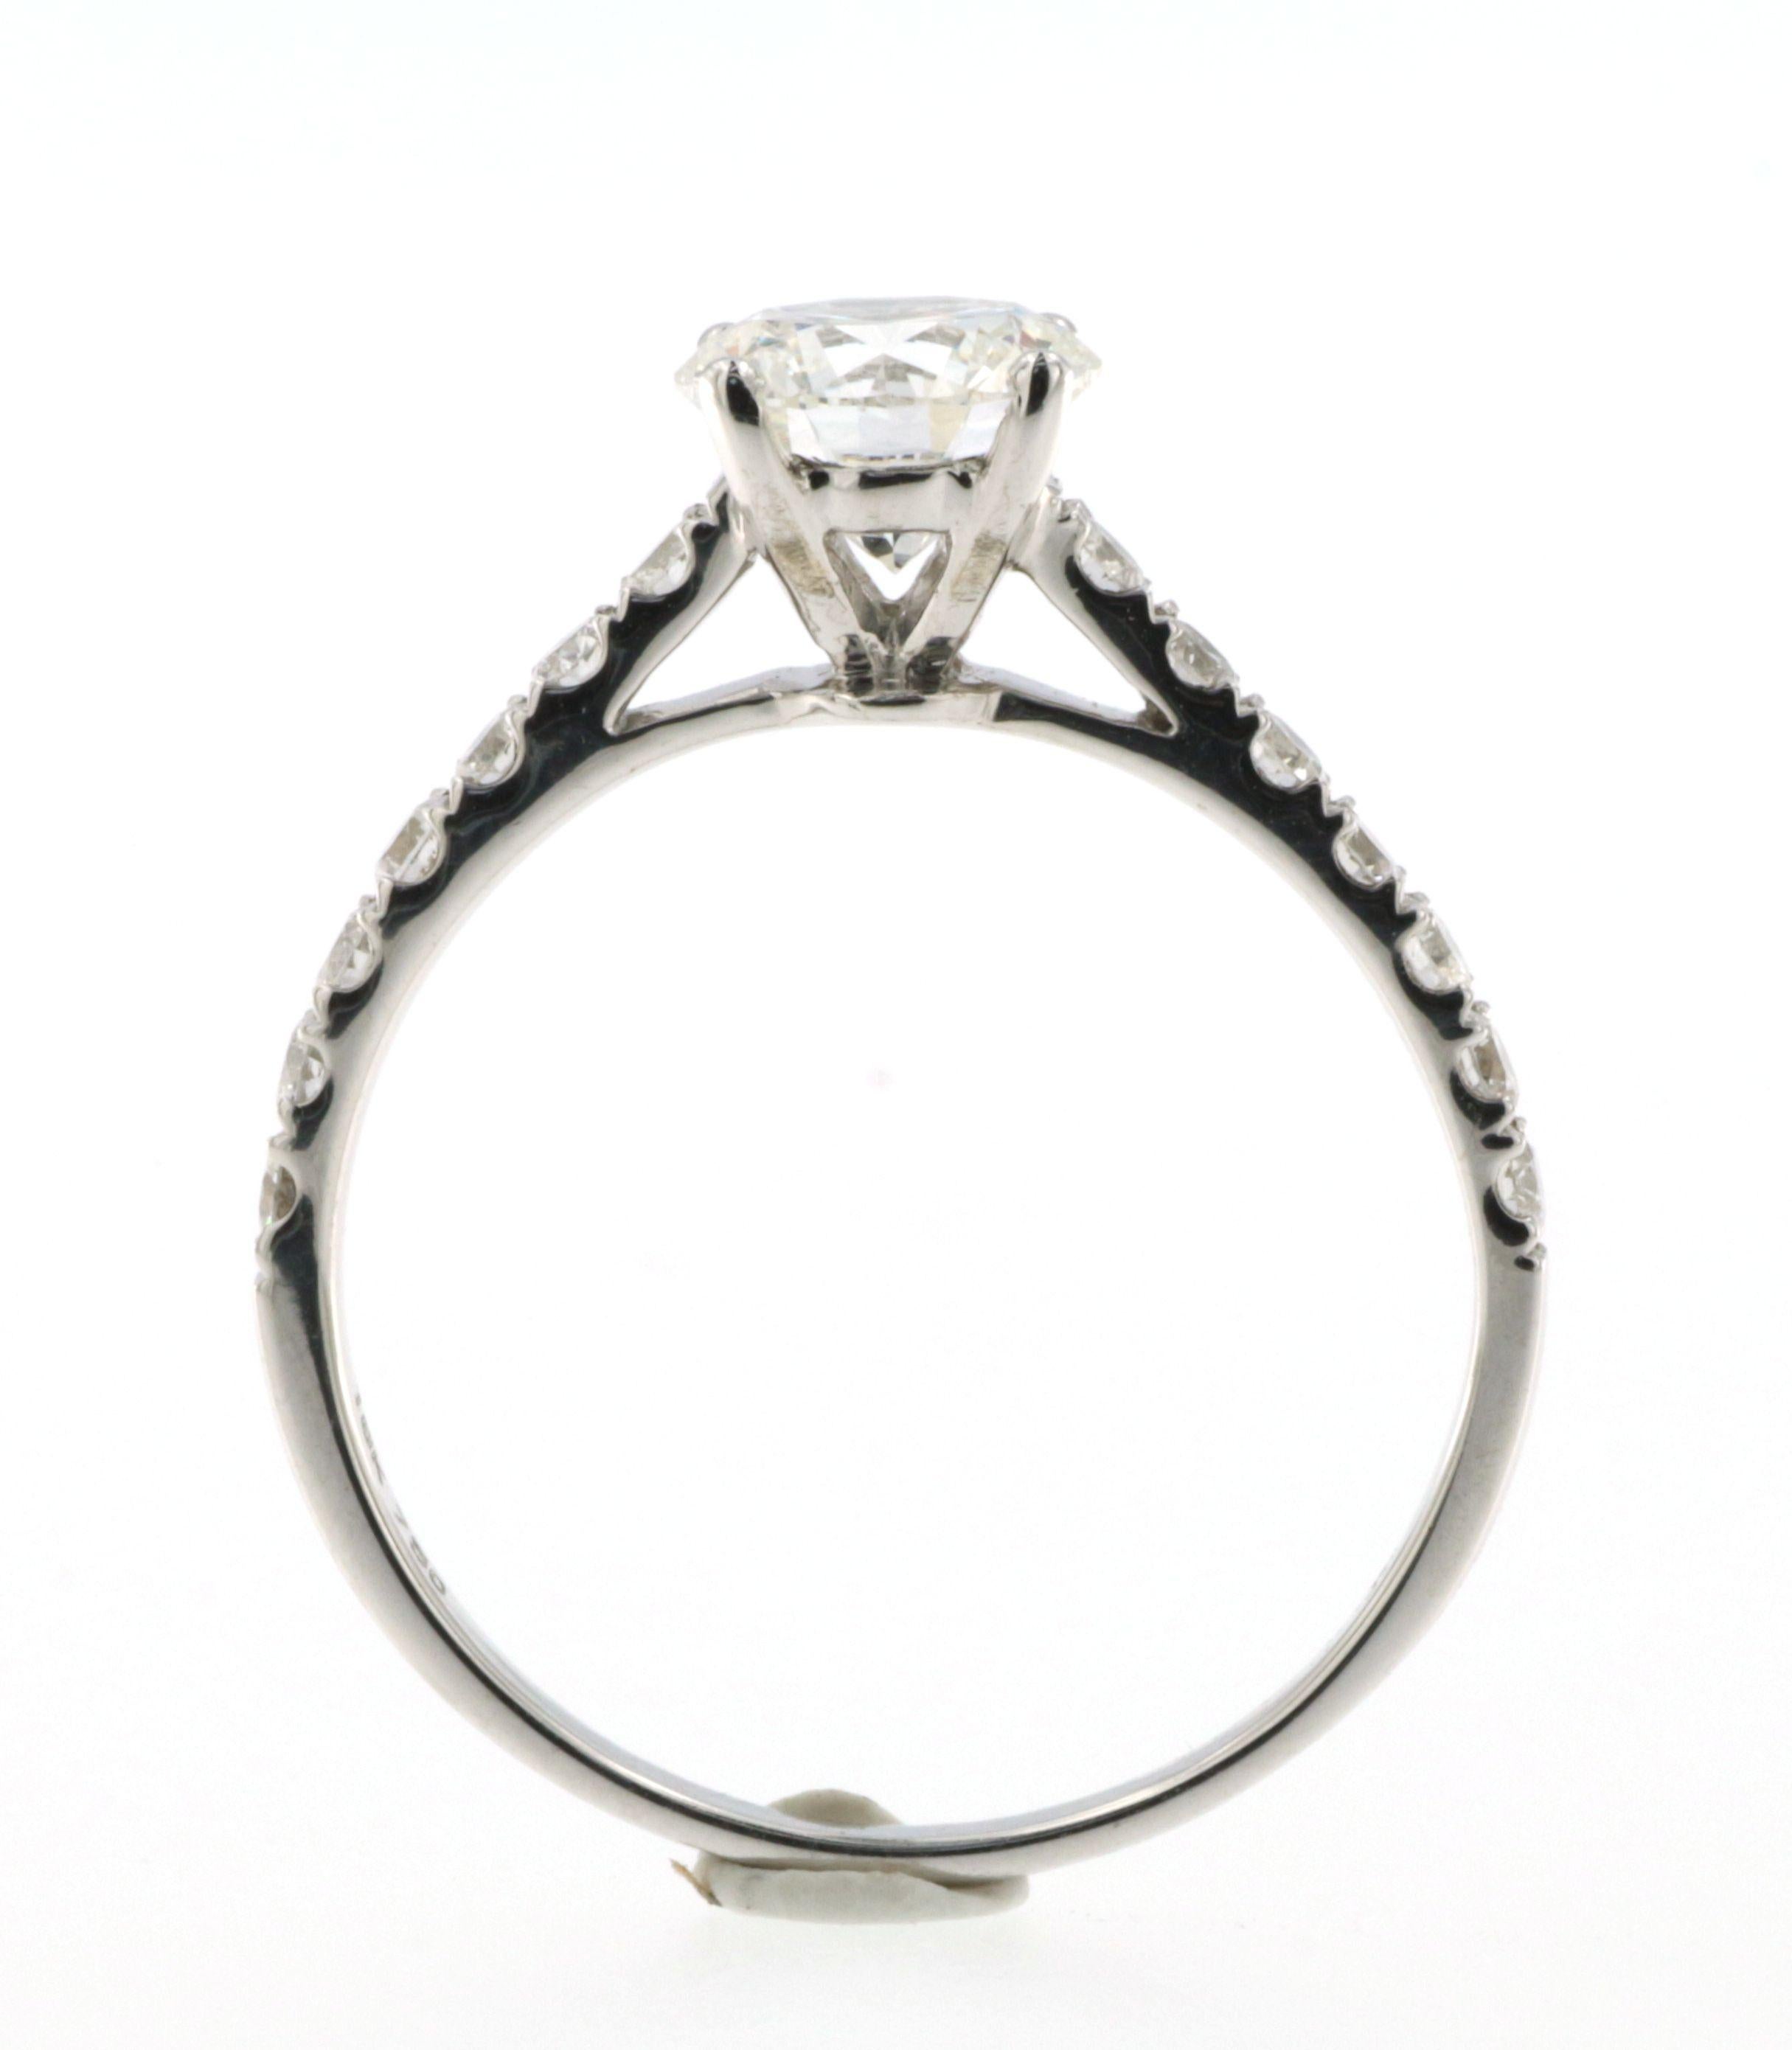 Brilliant Cut 1.02 Carat G VVS2 Round Diamond Ring in 18K White Gold For Sale